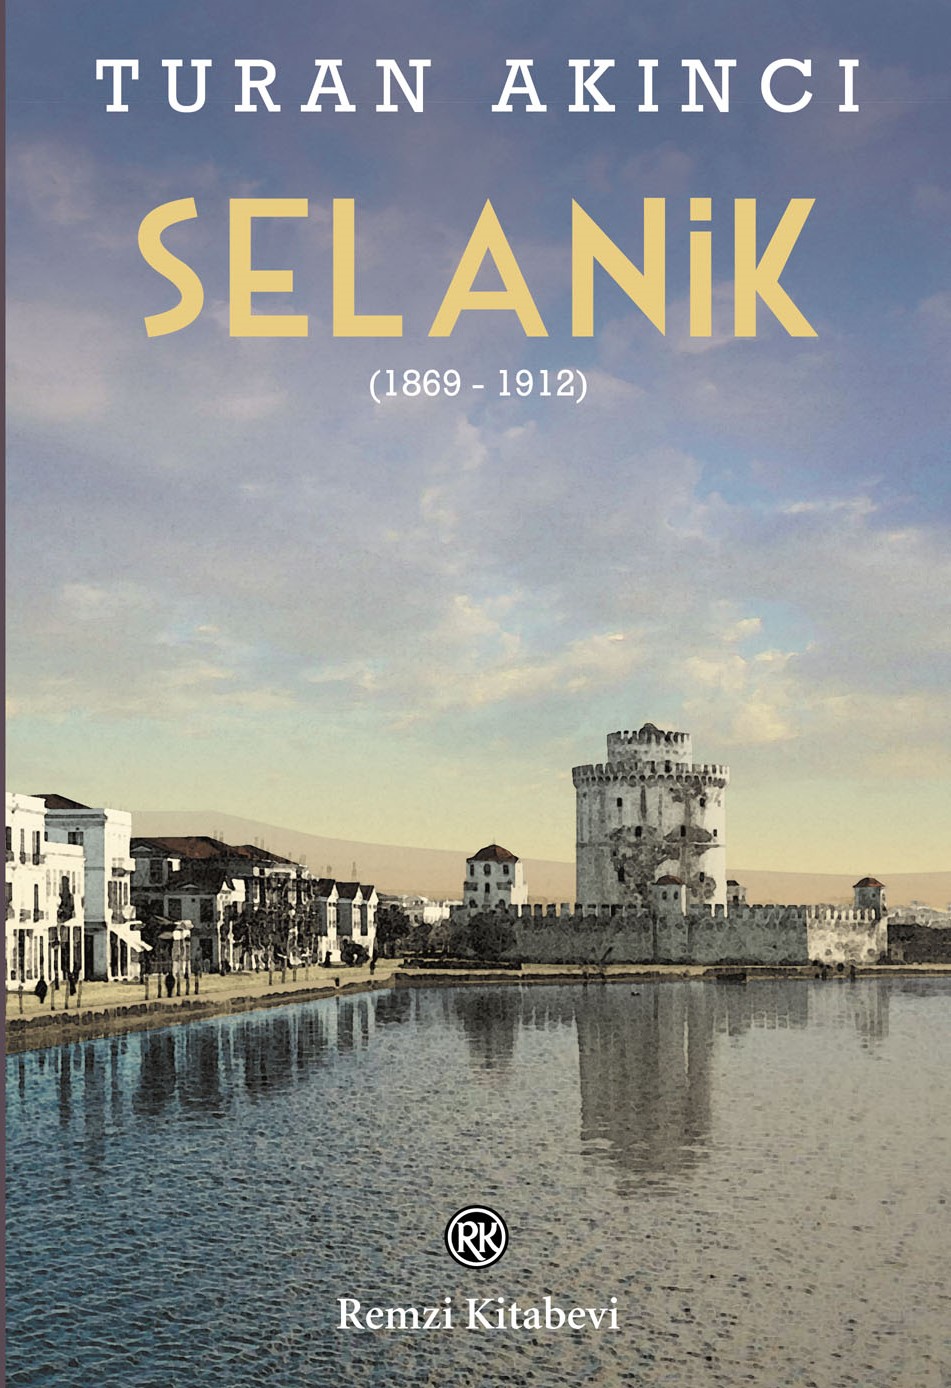 Turan Akıncı Selanik (1869 - 1923)